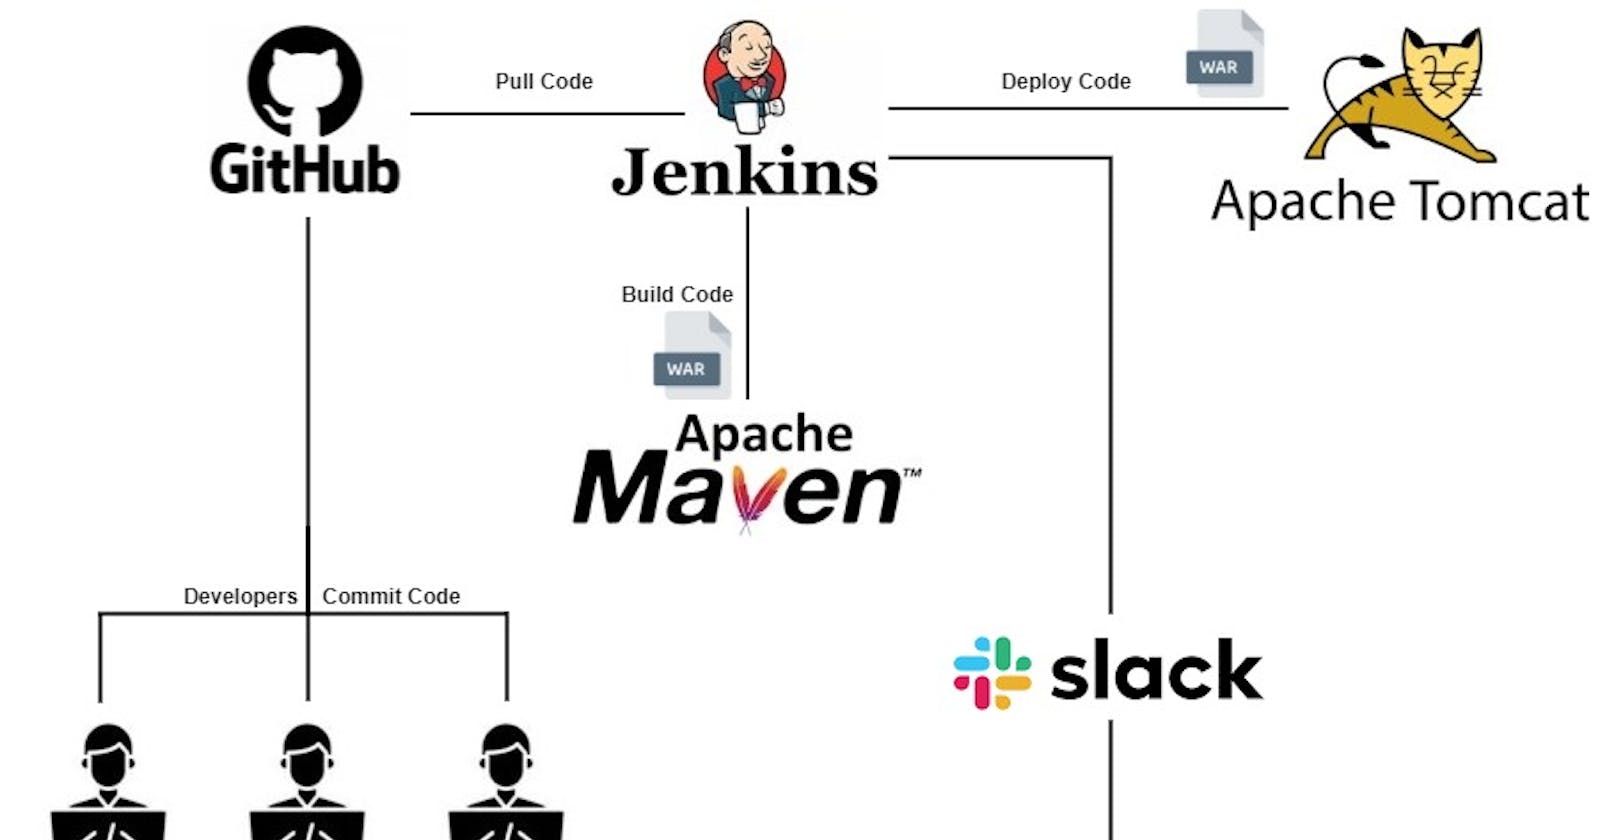 Deploy a Java Web Application to Tomcat Server Using Jenkins with SlackNotification.